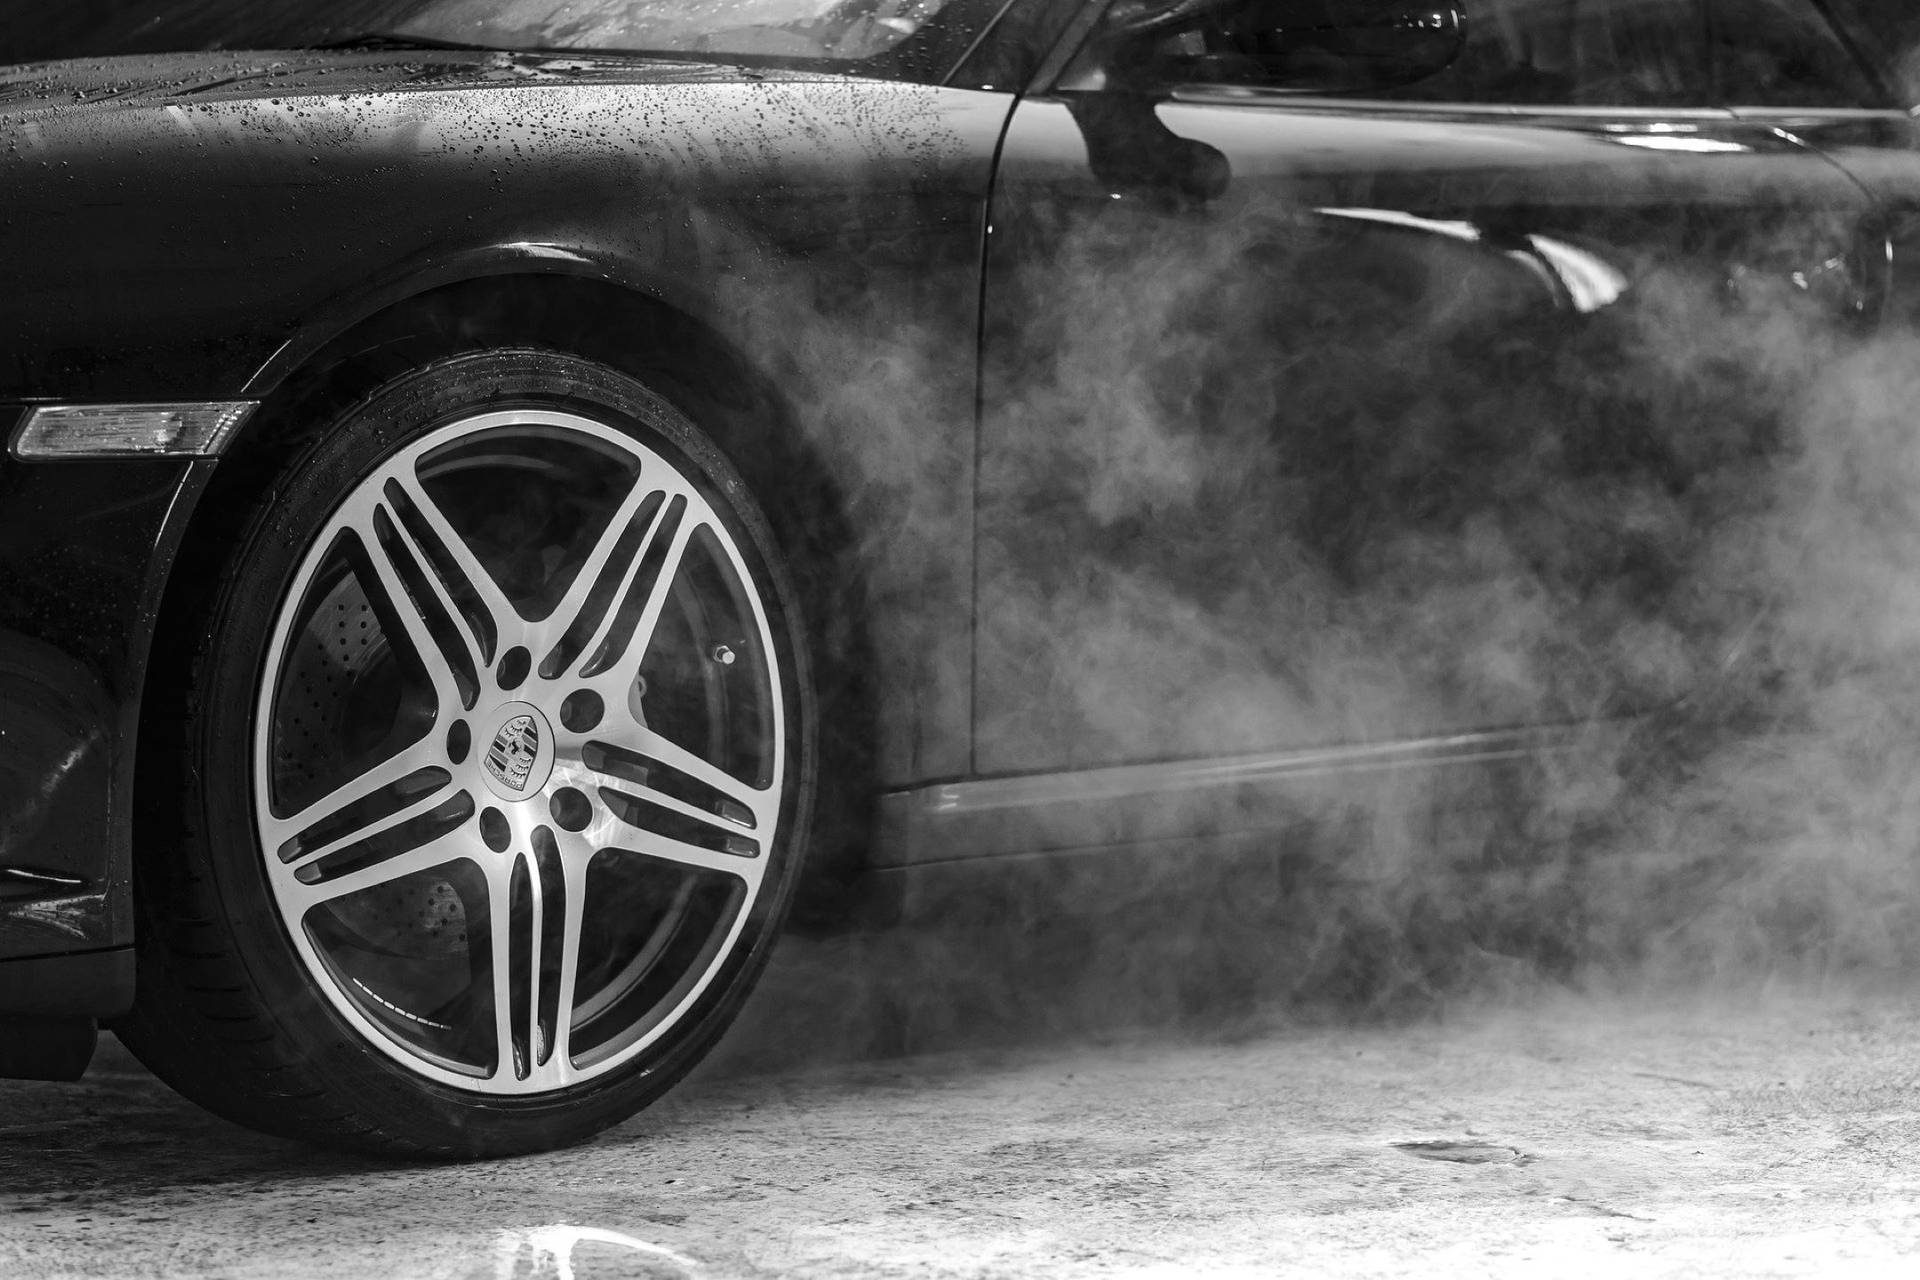 Cool Ferrari Steam Car Wash Background